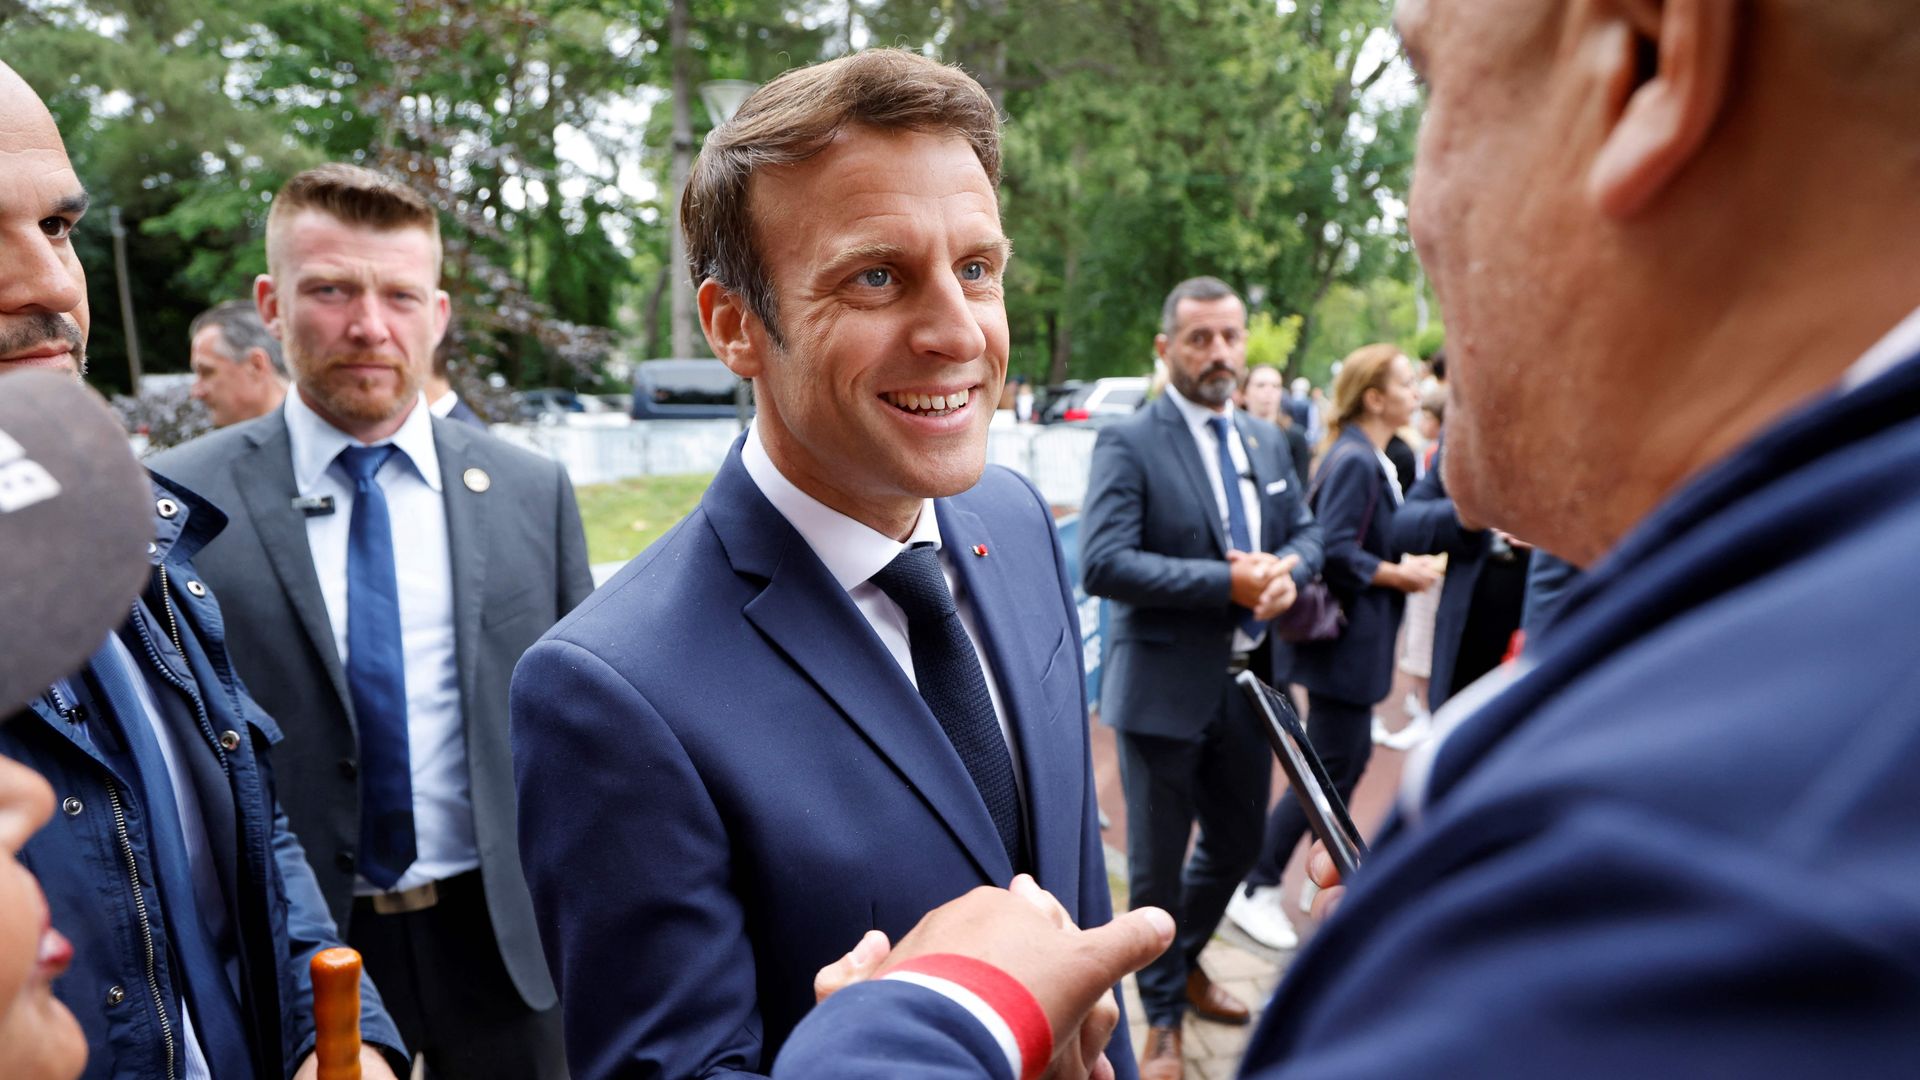 Emmanuel Macron speaks to fellow voters as he arrives to vote